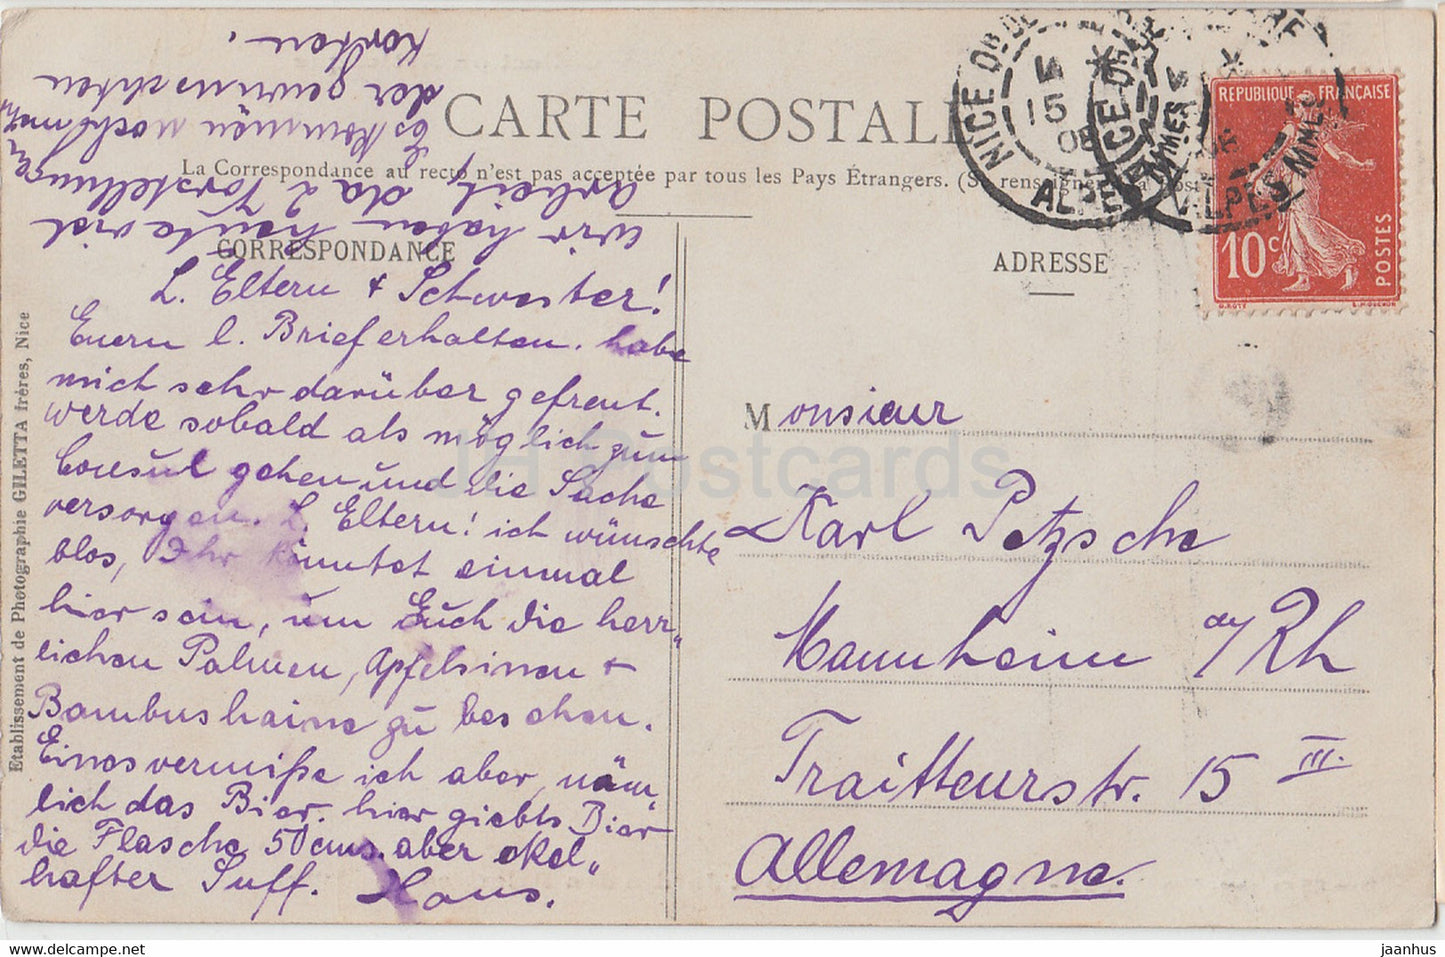 Nice - Le Casino et Jardin des Palmiers - Collection Artistique - 46 - old postcard - 1908 - France - used